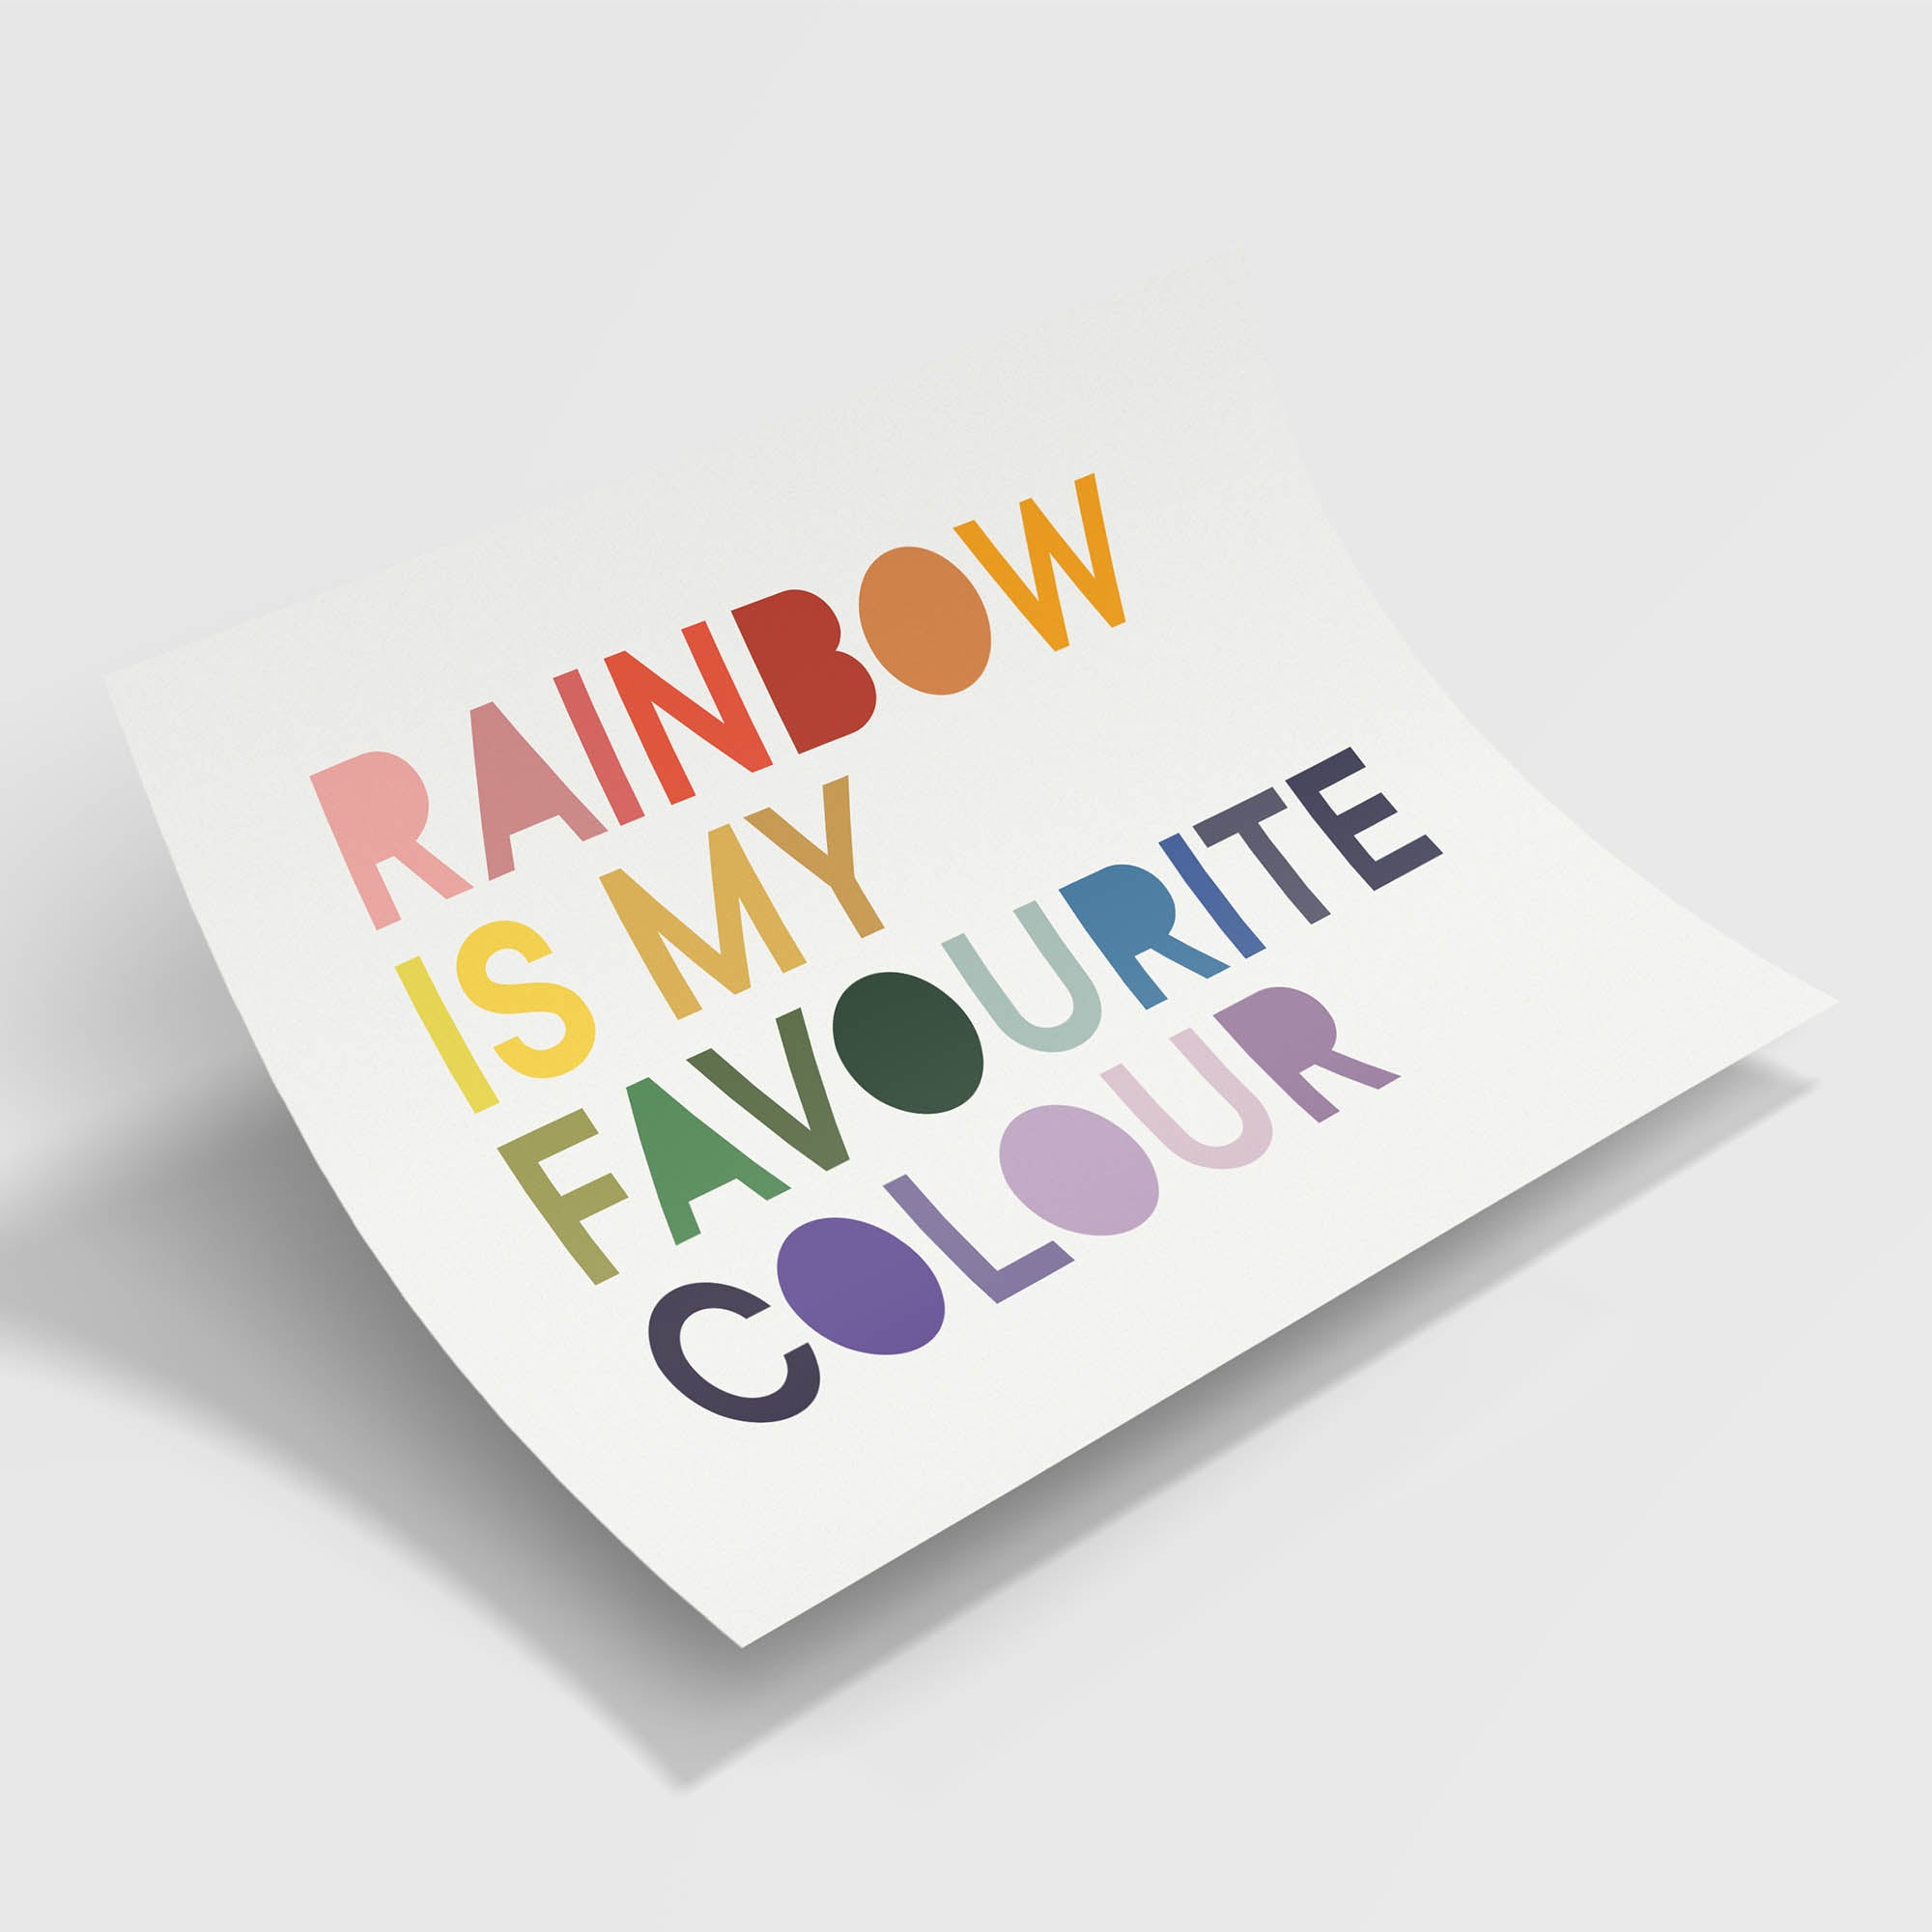 Rainbow is my Favourite Colour Fine Art Print